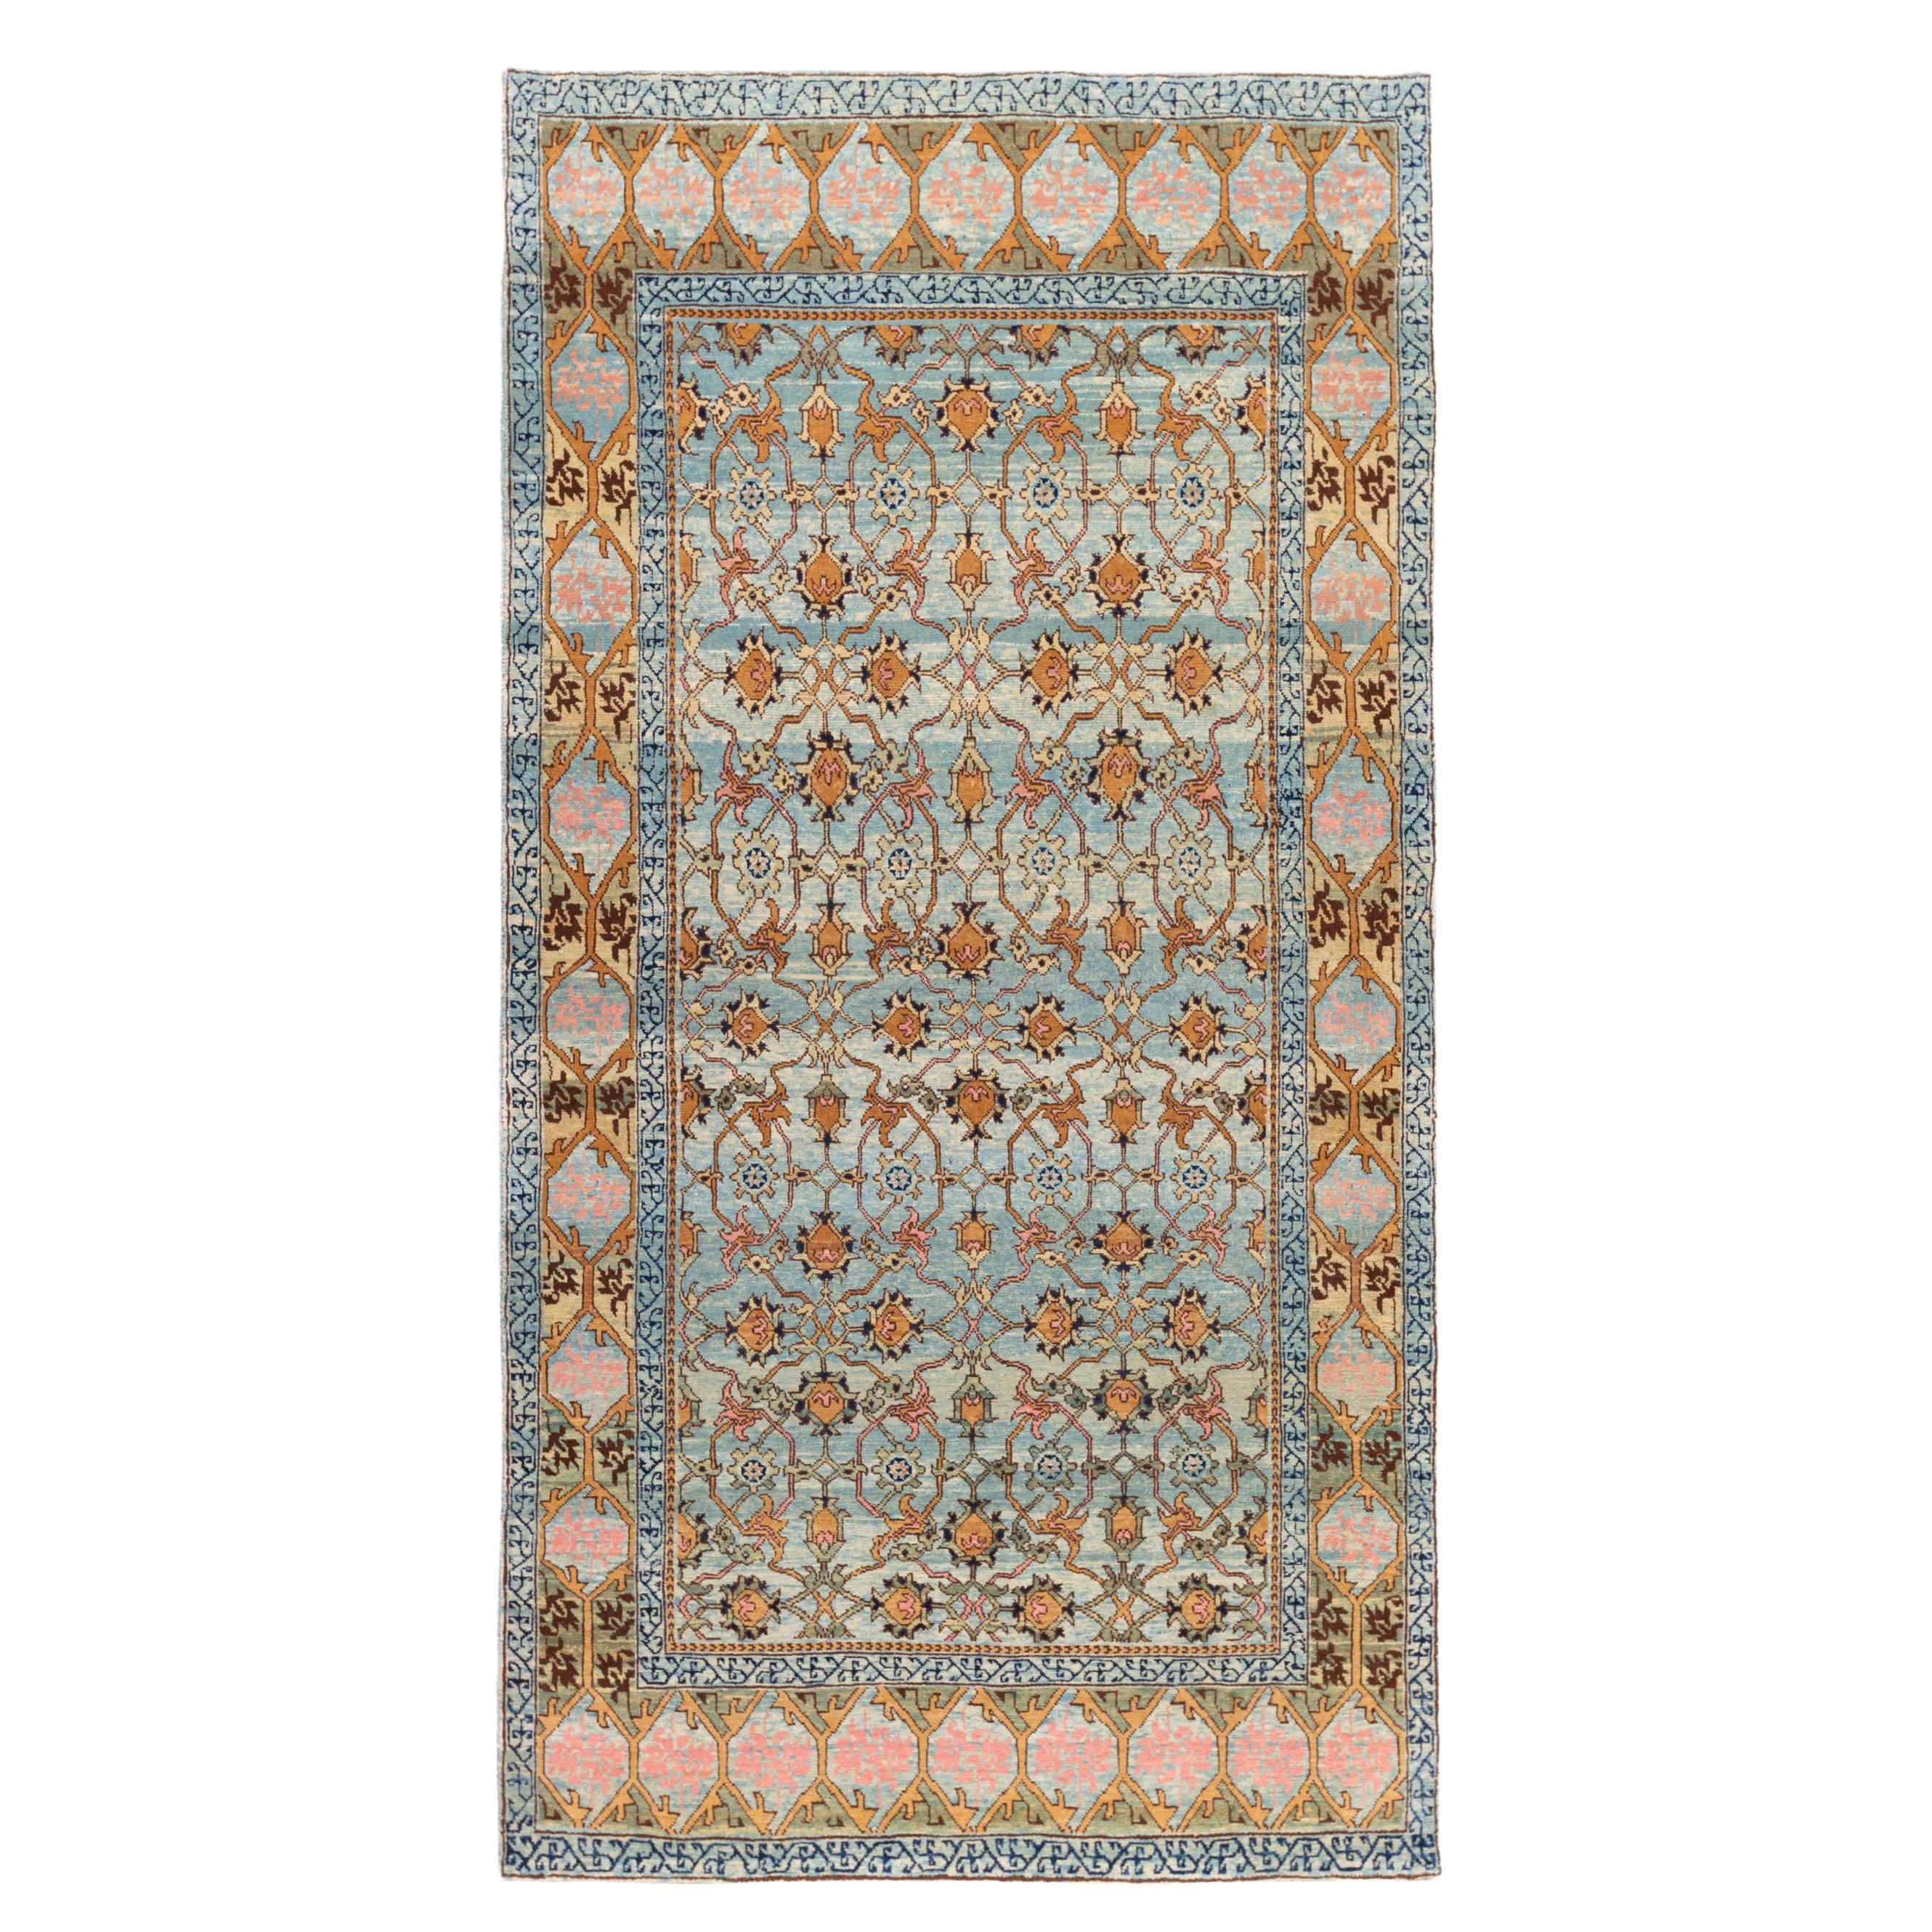 Ararat Rugs Mamluk Carpet with Lattice Design, Antique Revival Rug Natural Dyed For Sale